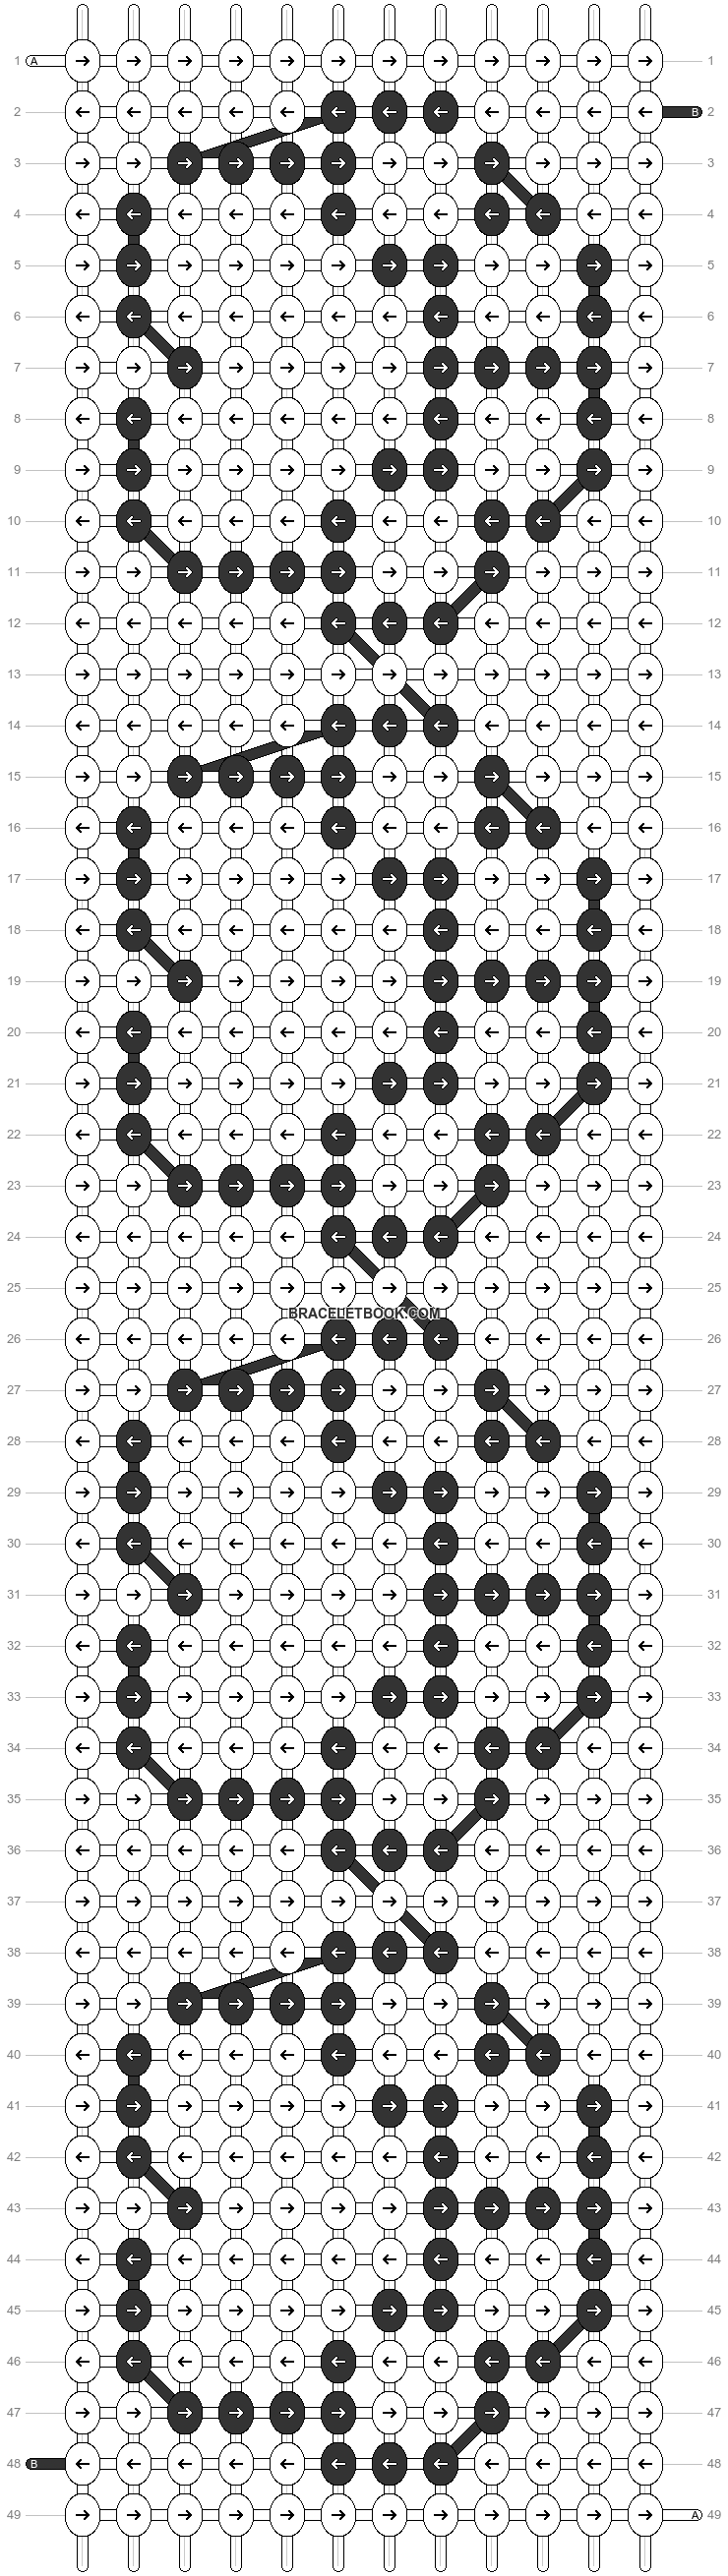 Alpha pattern #48049 variation #112048 pattern